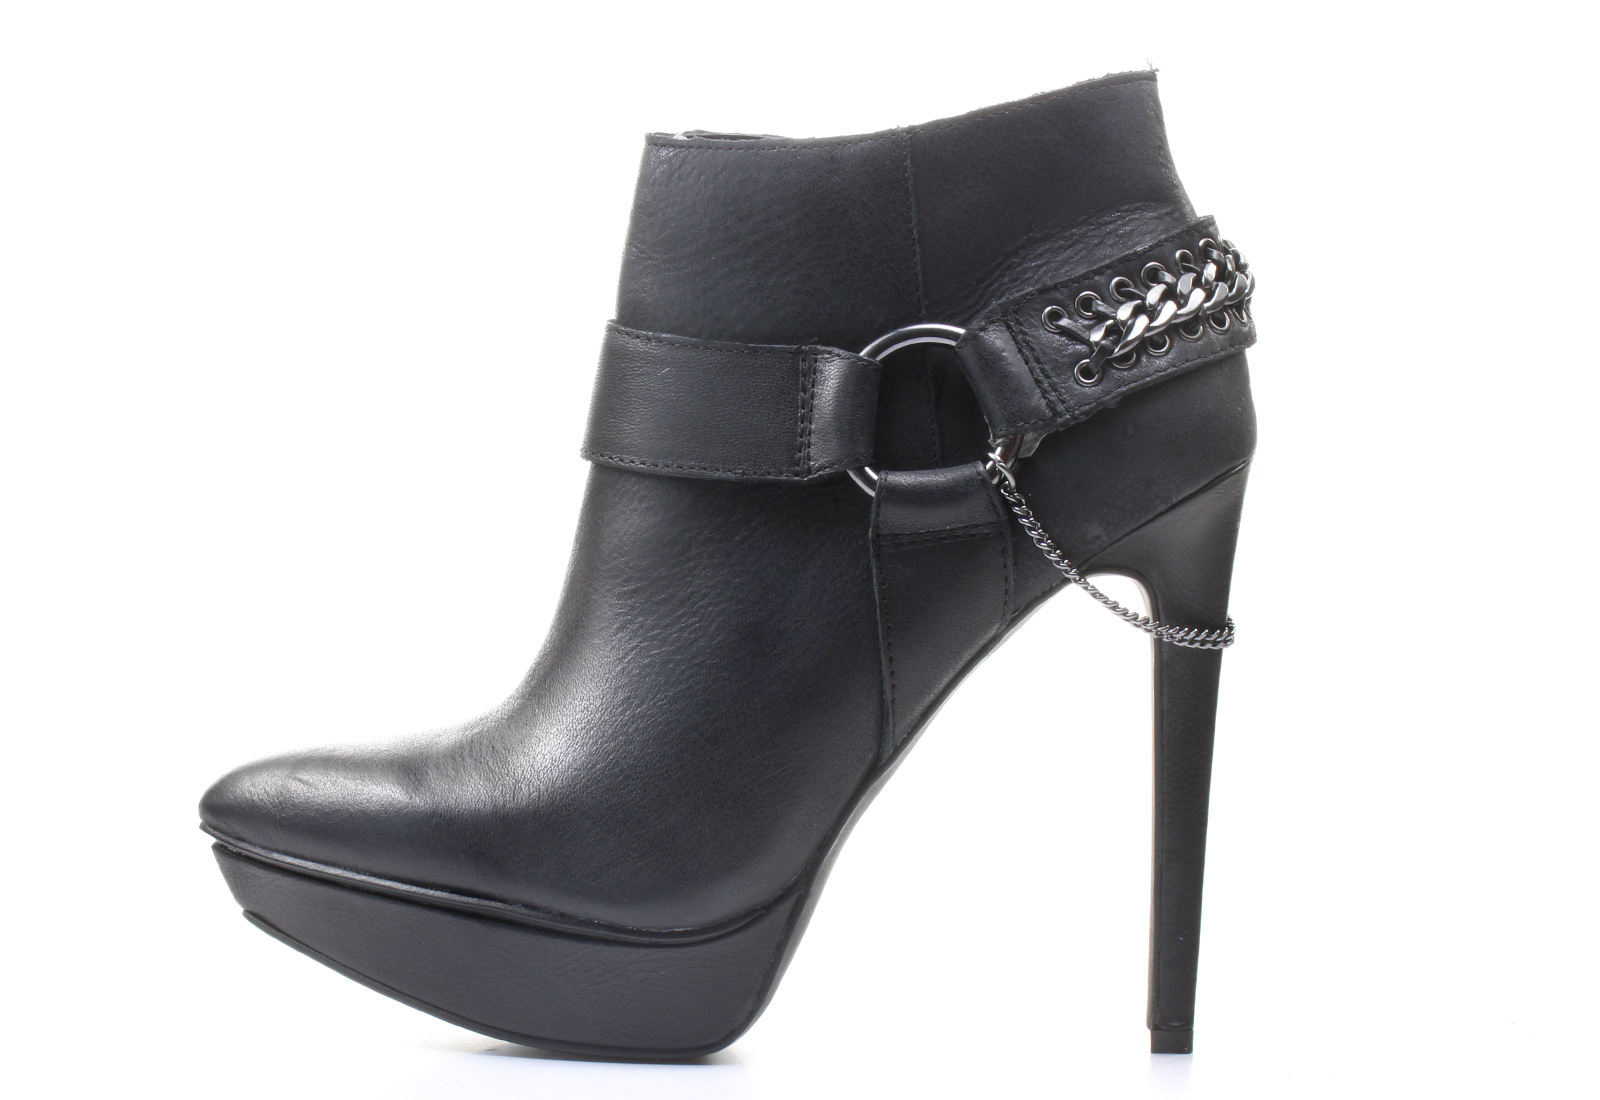 Jessica Simpson Boots - Vinata - vinata-blk - Online shop for sneakers, shoes and boots